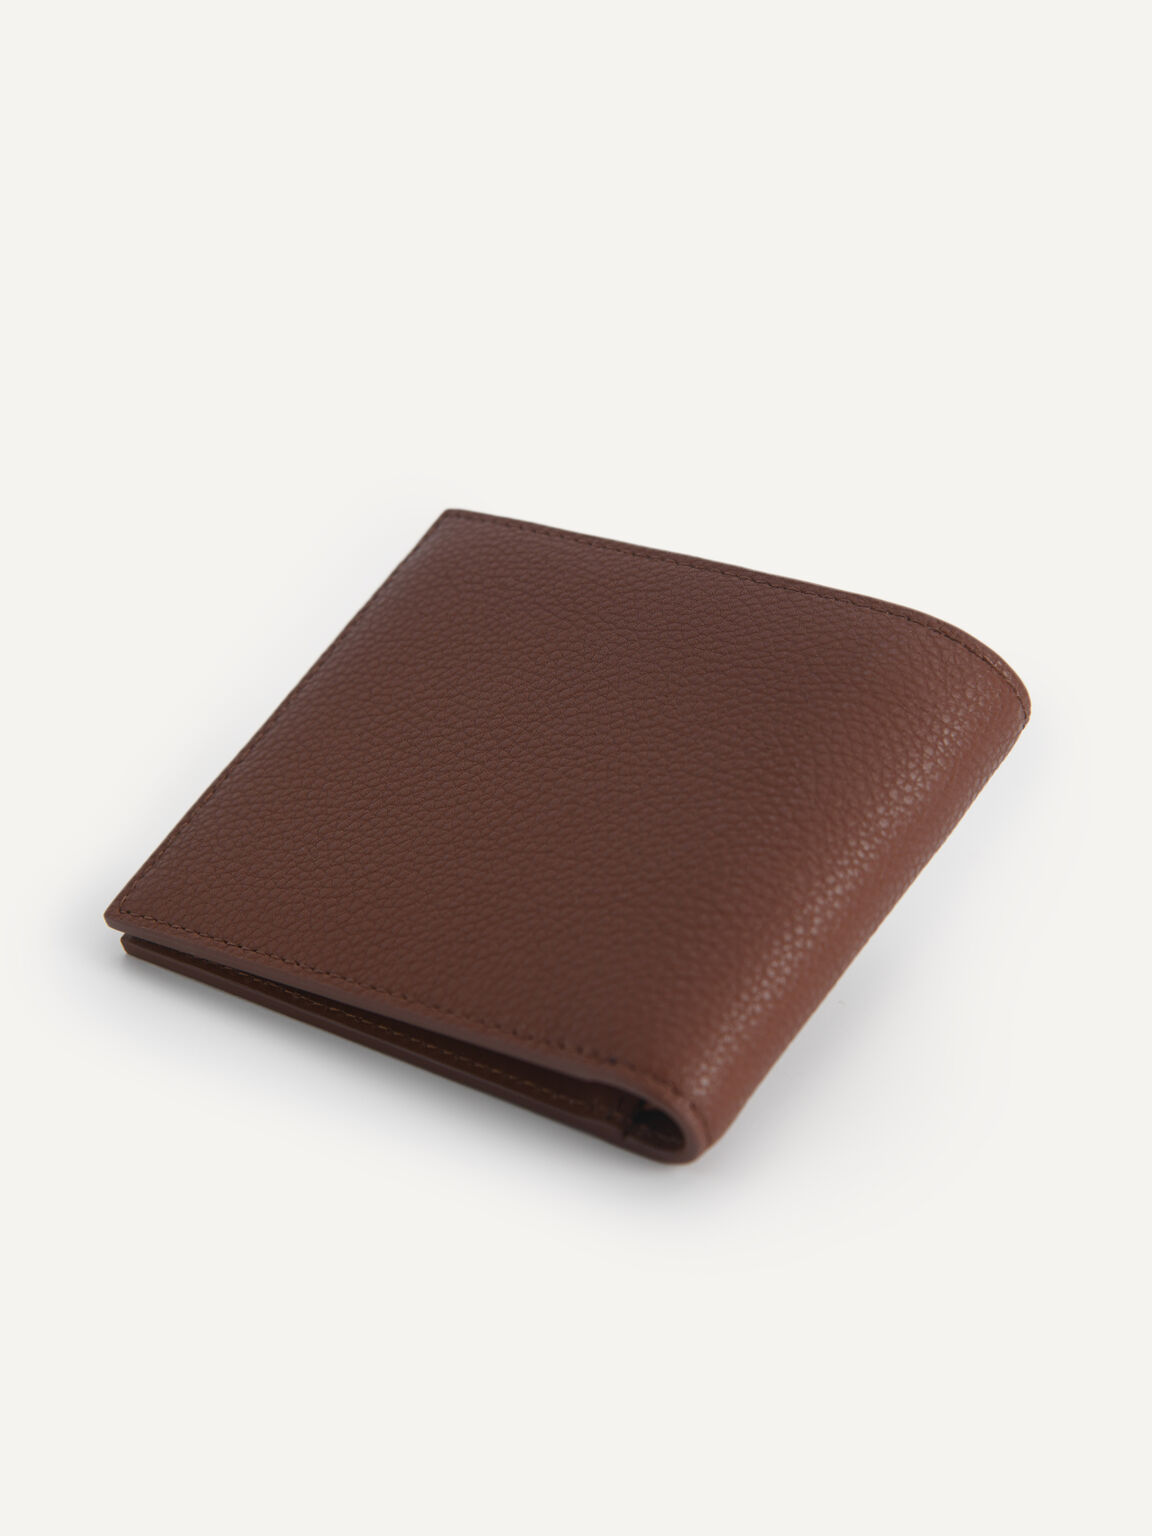 Textured Leather Bi-Fold Wallet, Cognac, hi-res